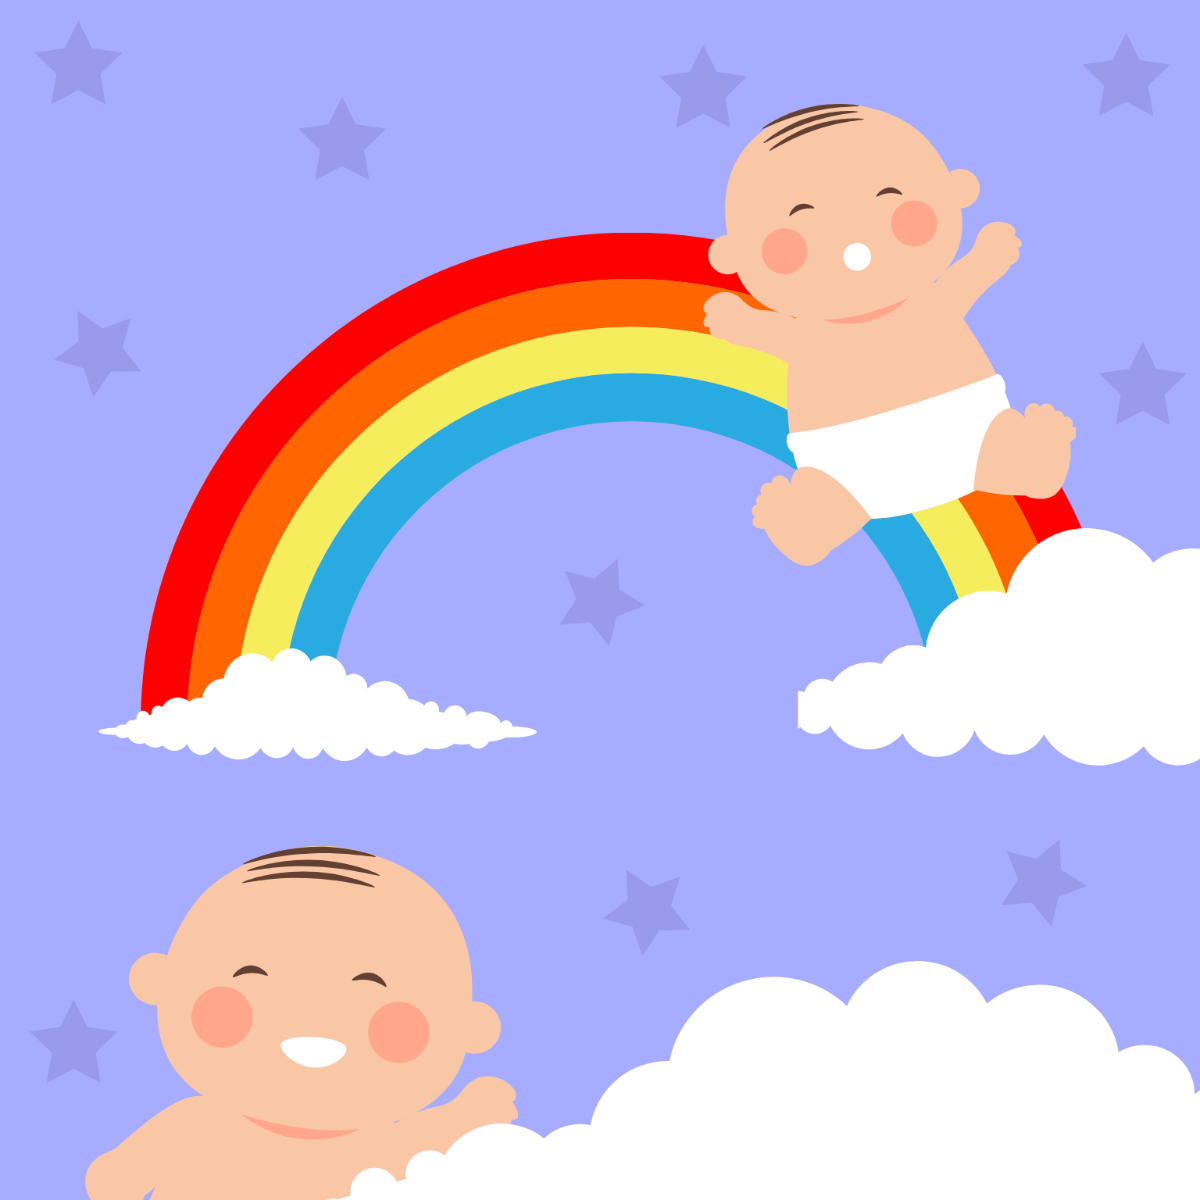 Baby Illustration